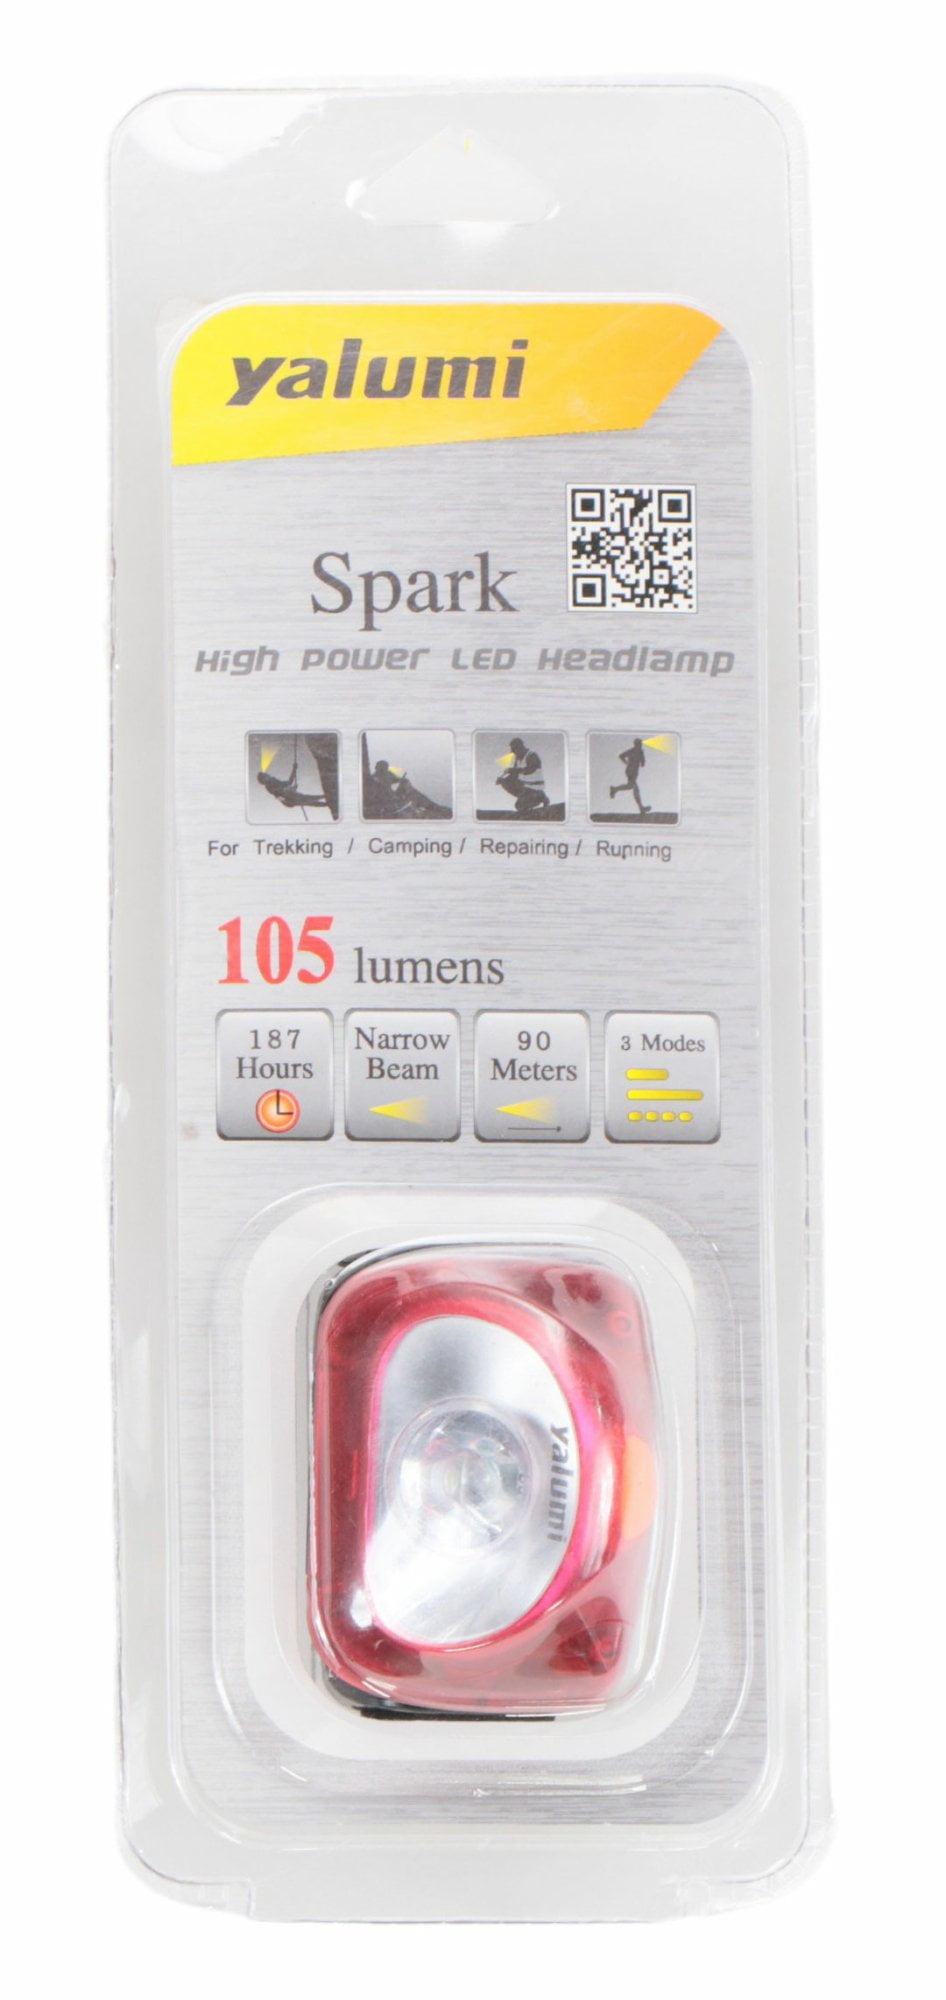 for camping, LED Headlamp yalumi Spark Dual 105 Lumens-Red  Lightweight 2.7 oz 